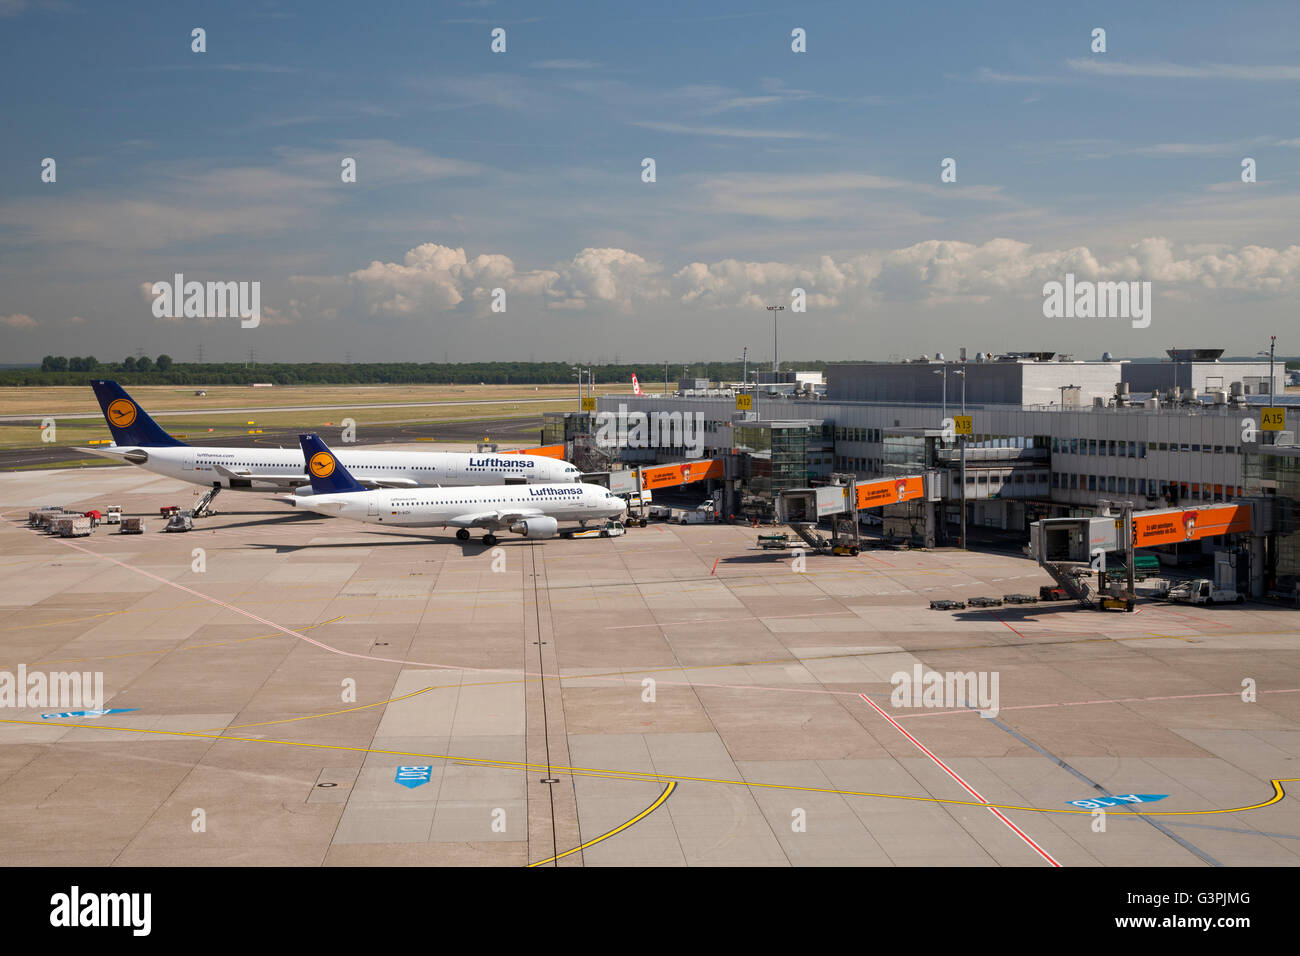 Lufthansa aereo al gate, Airbus A320-200 e Airbus A340-300, Duesseldorf Airport, regione renana Foto Stock